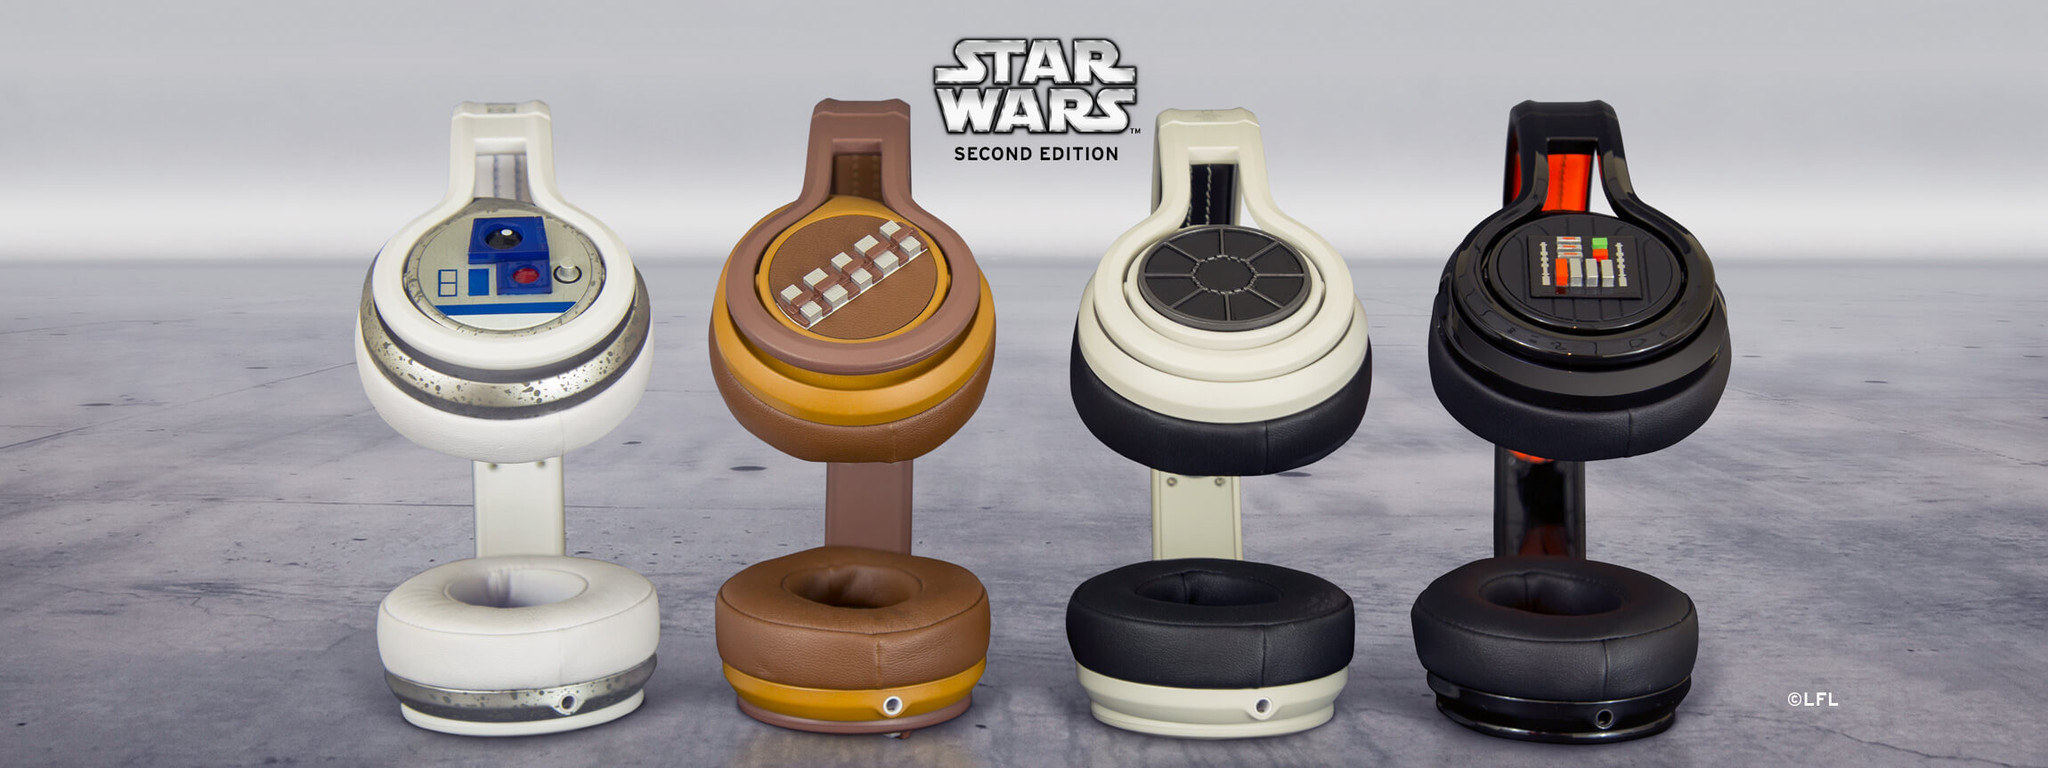 Star Wars Headphones 2 Edition